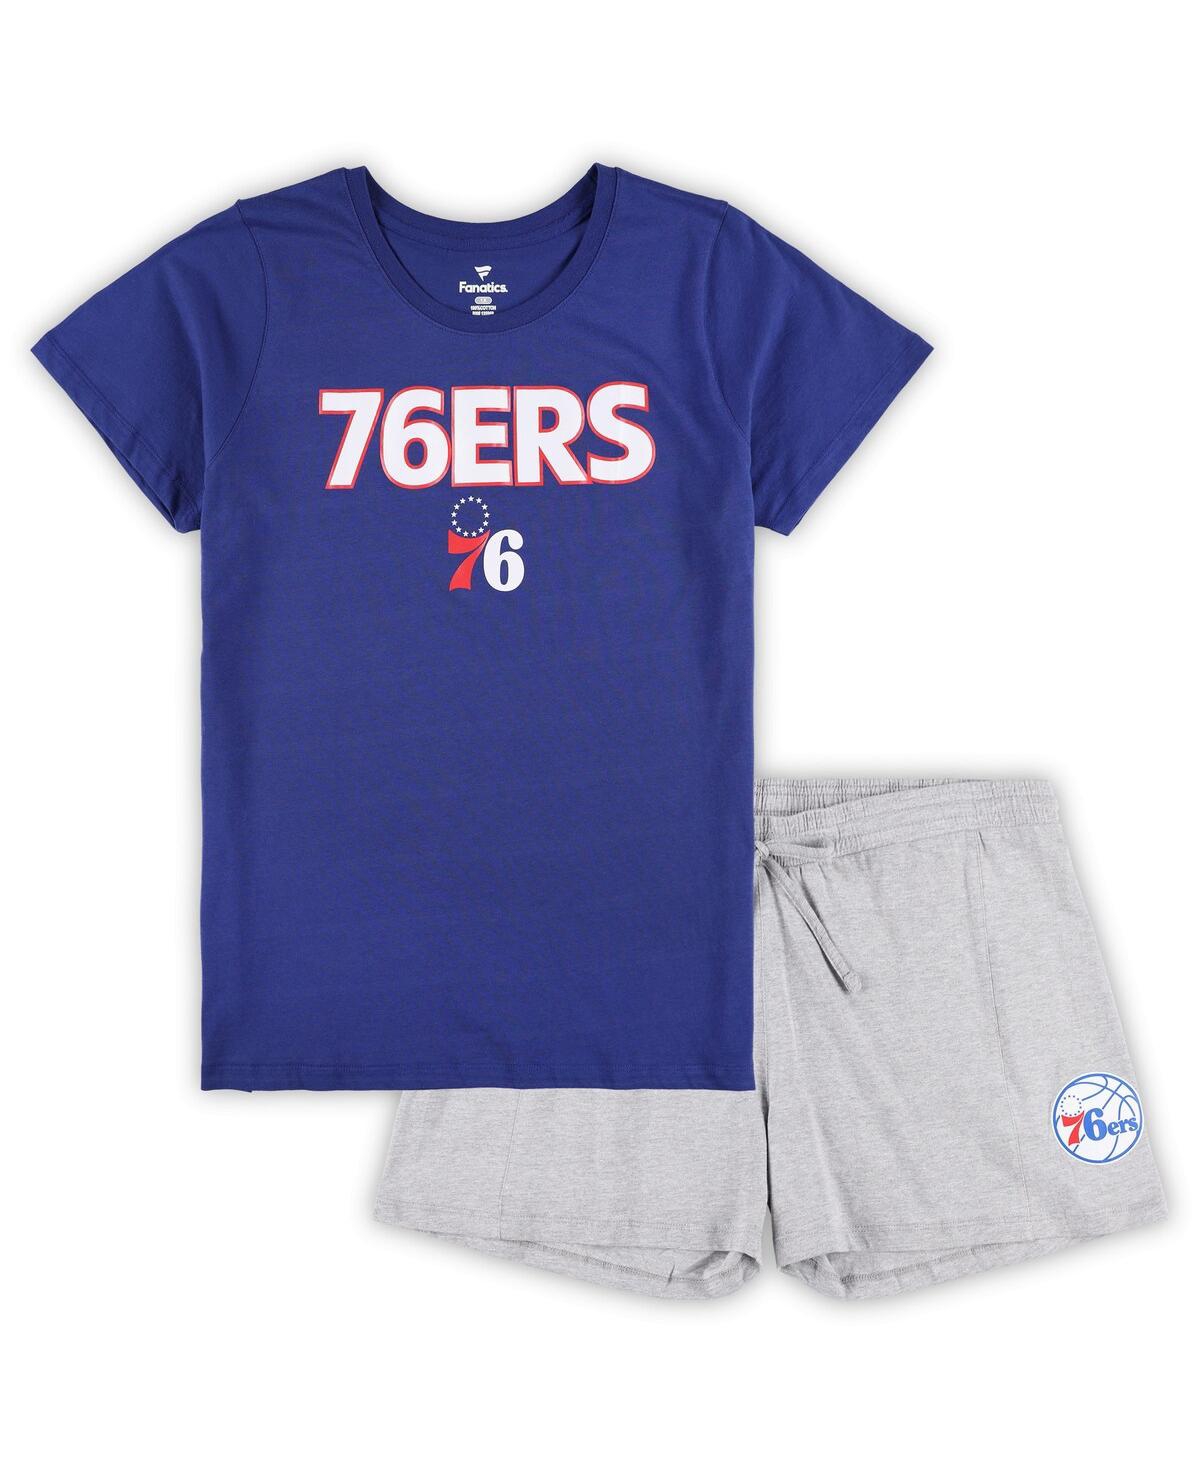 Women's Fanatics Royal, Heather Gray Philadelphia 76ers Plus Size T-shirt and Shorts Combo Set - Royal, Heather Gray